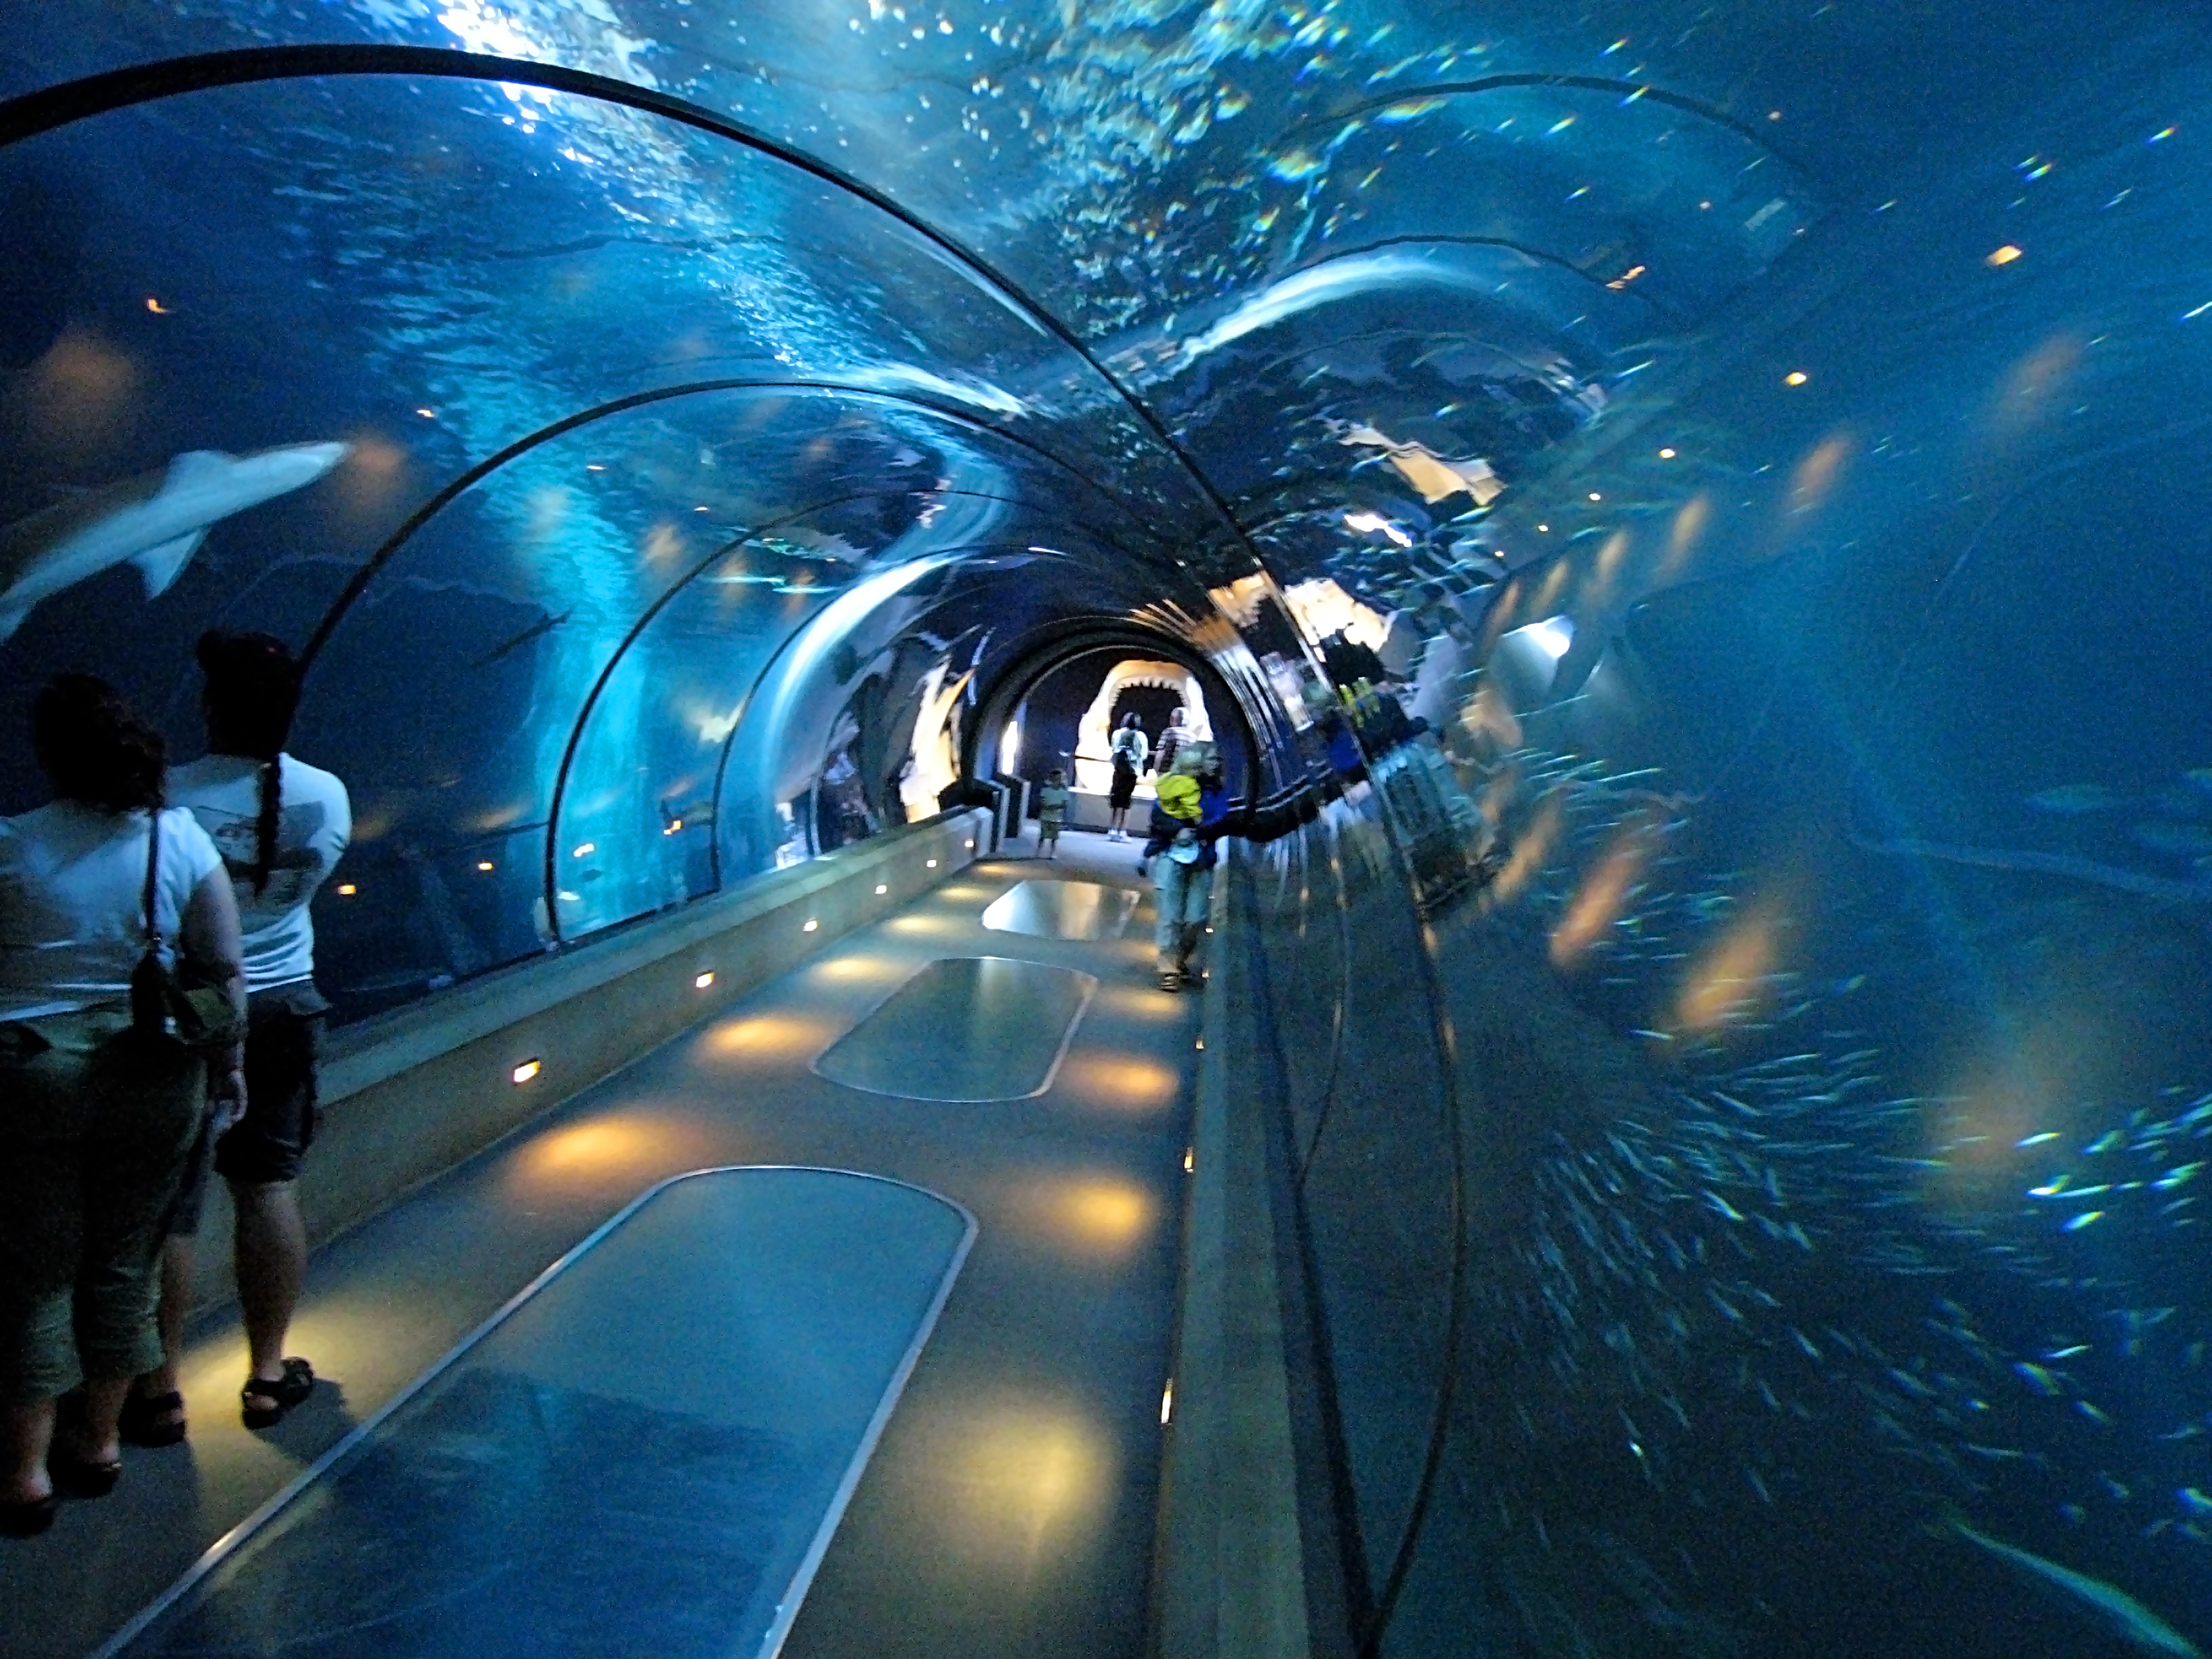 File:Aquarium tunnel.jpg - Wikimedia Commons